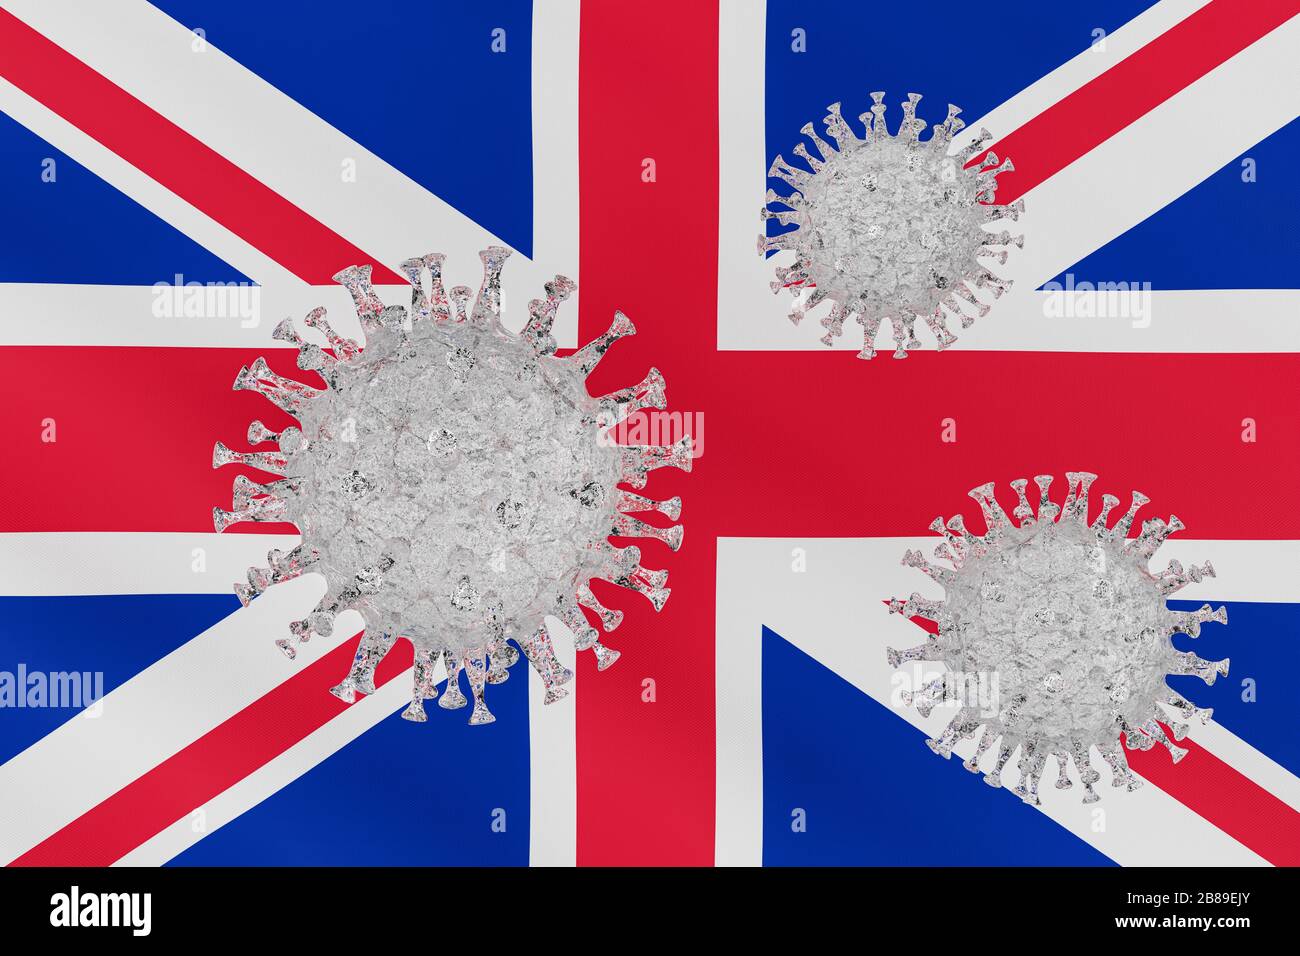 Вирус в британии. Коронавирус в Англии. Коронавирус в Великобритании. Пандемия Великобритания. Великобритания период пандемии.